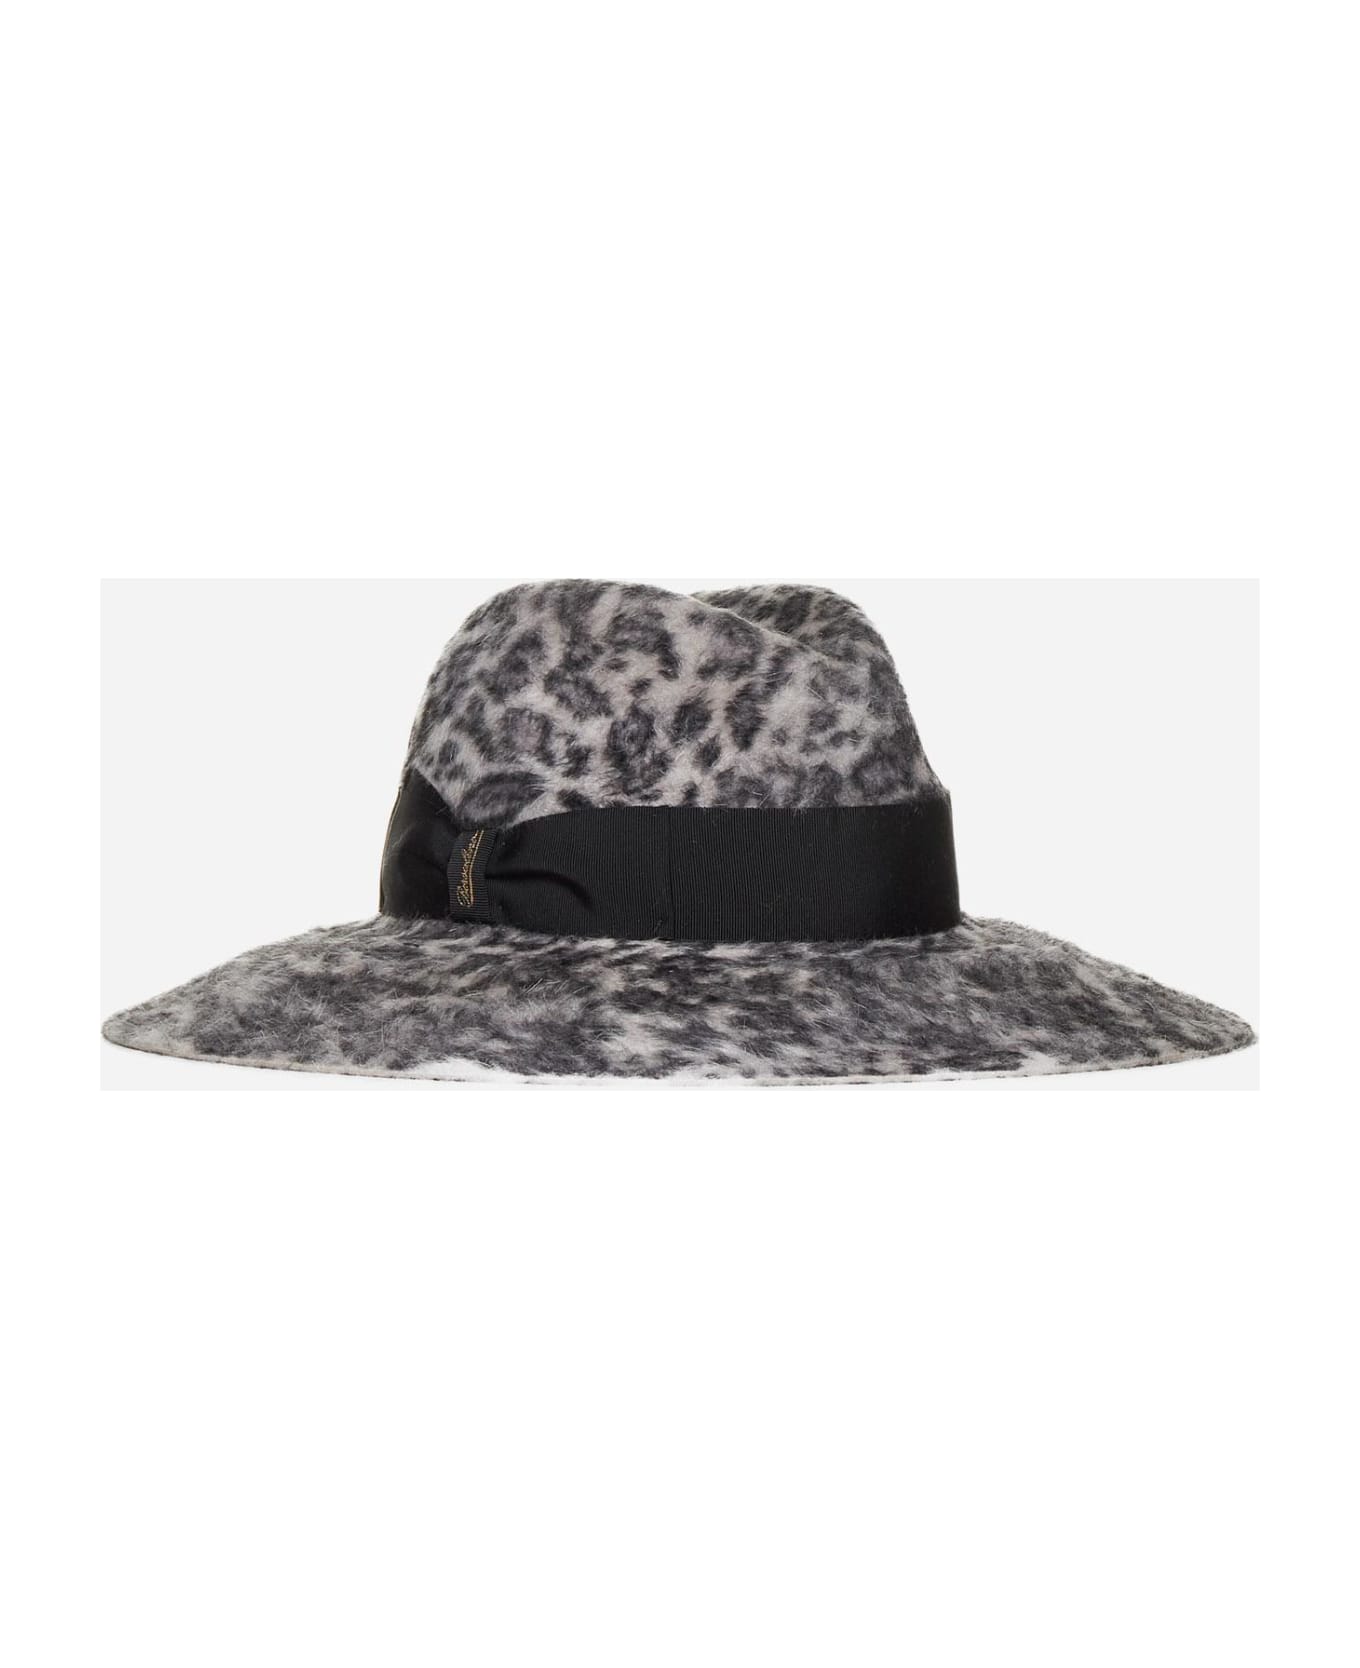 Borsalino Sophie Leopard Felt Hat